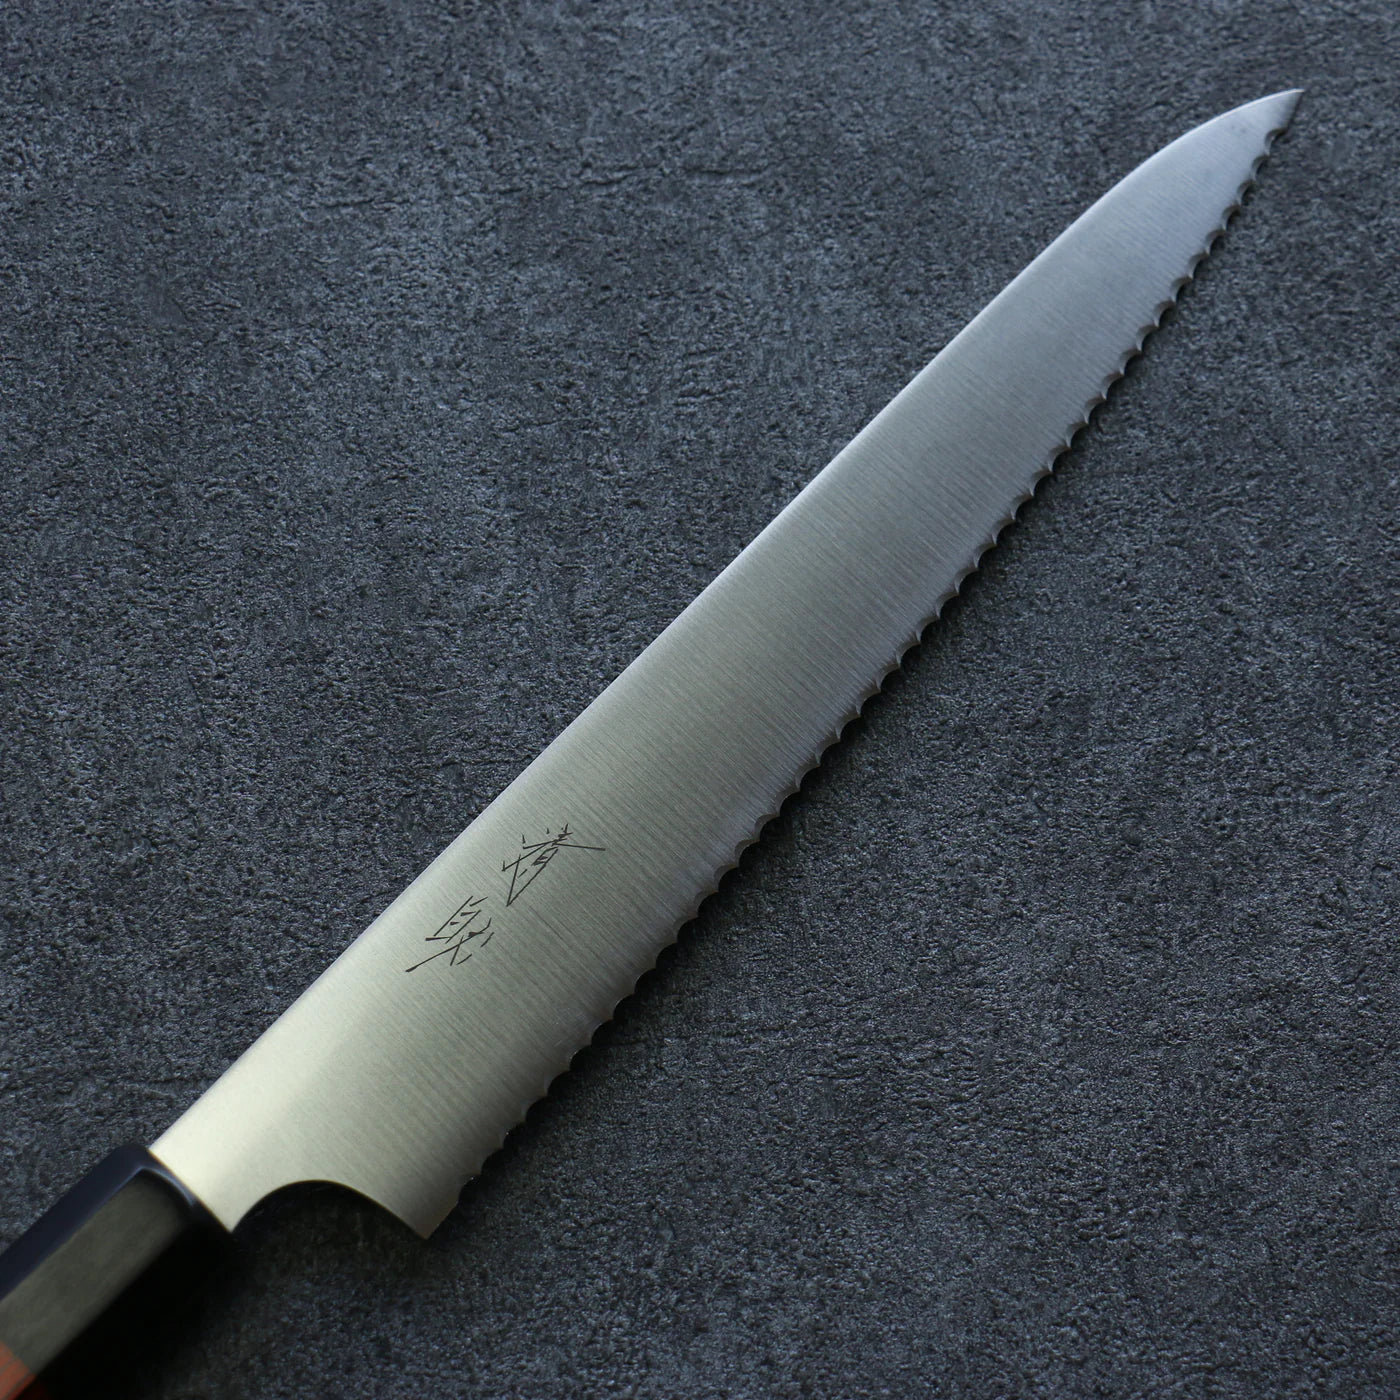 Japanisches Brotmesser der Marke Seisuke, 240 mm Edelstahl, roter Sperrholzgriff.